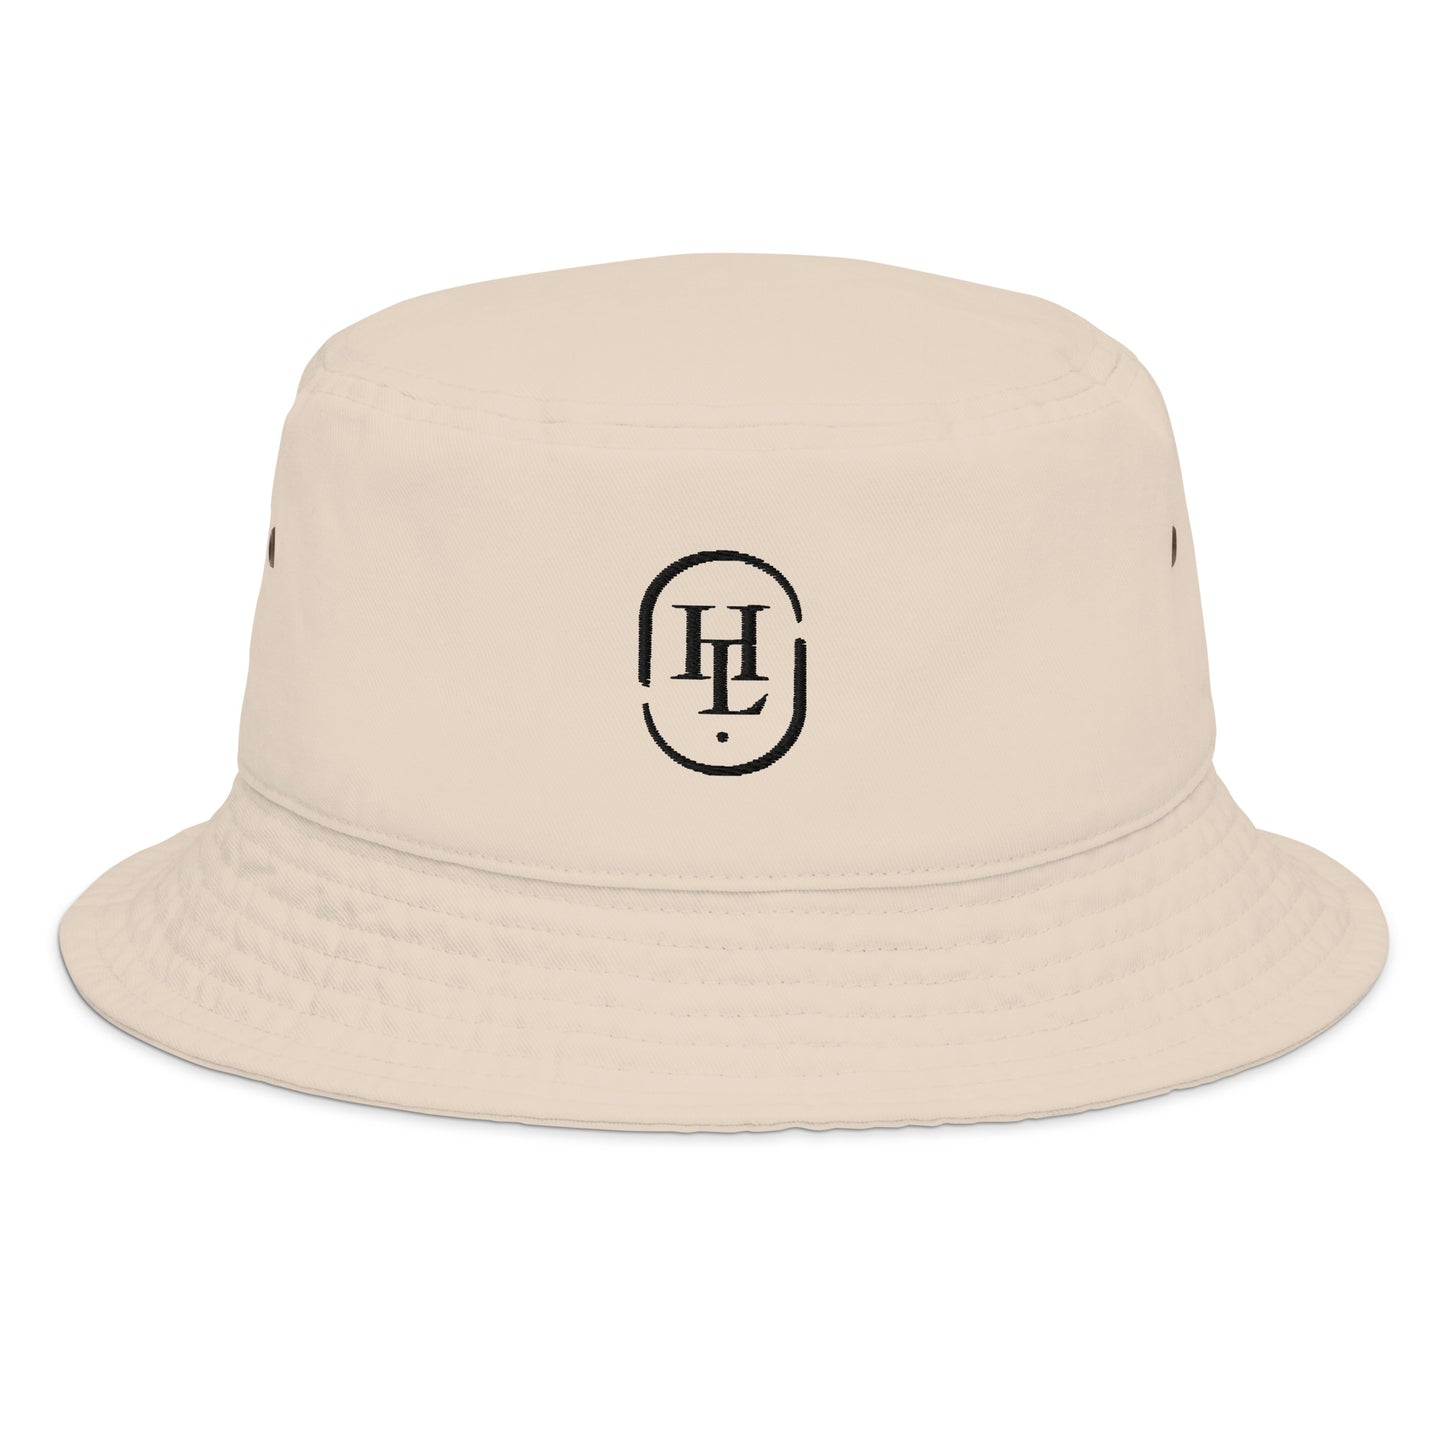 HULAM bucket hat